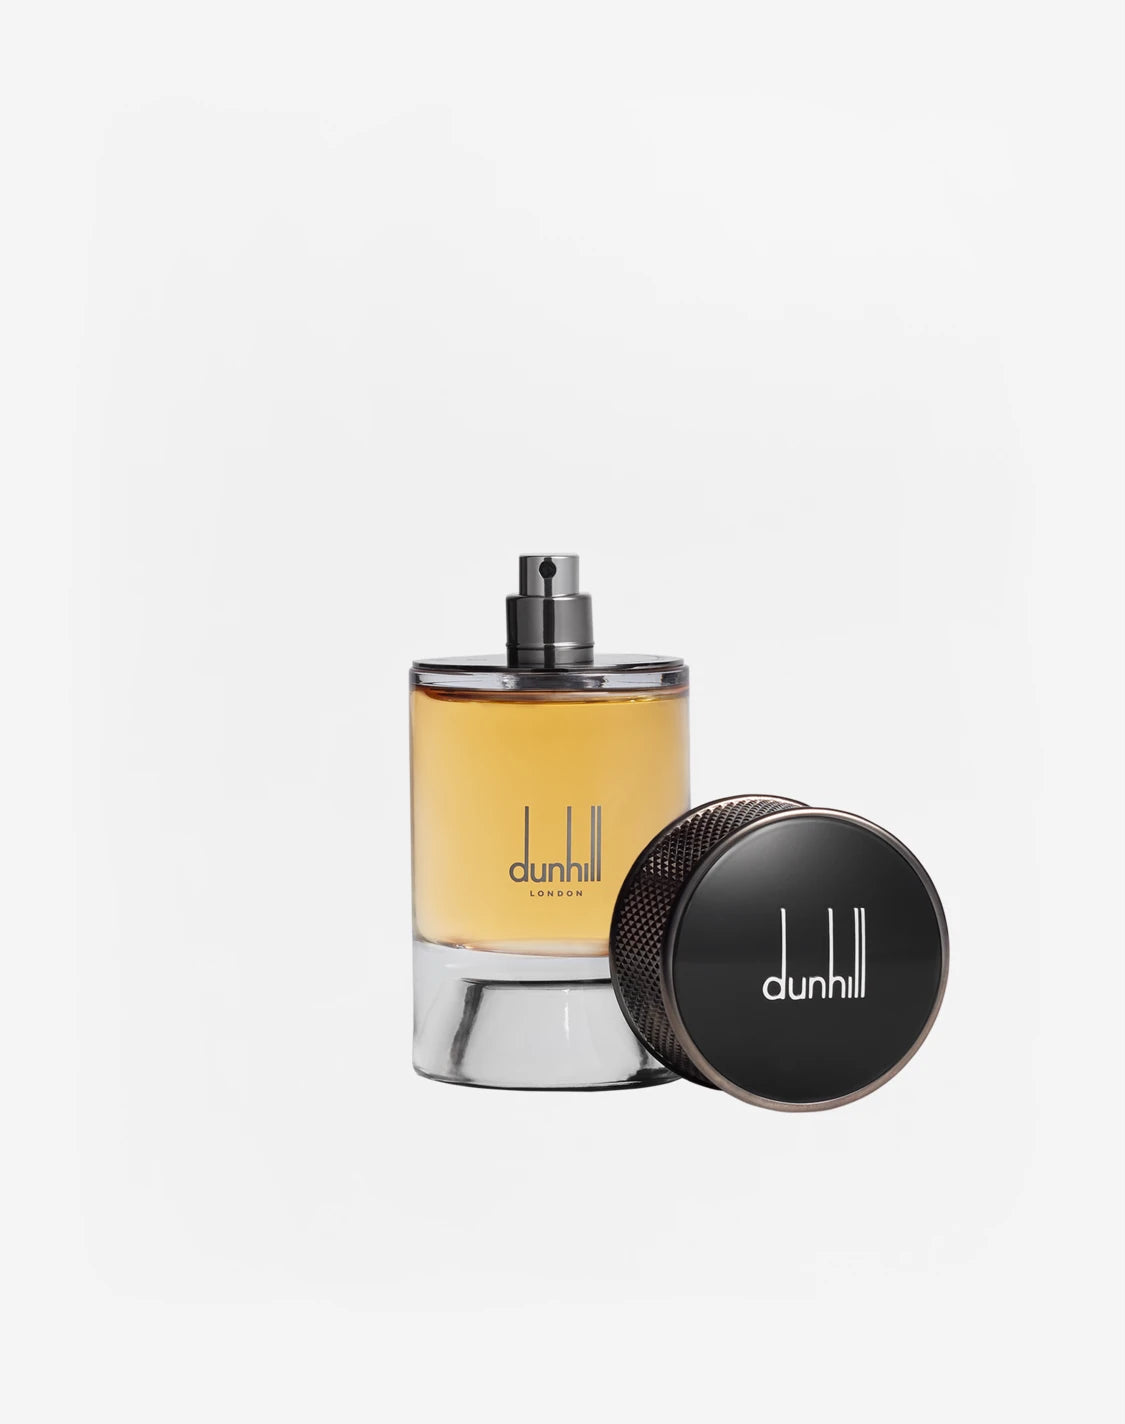 Dunhill Signature Collection Moroccan Amber Eau De Parfum for Men 100ml